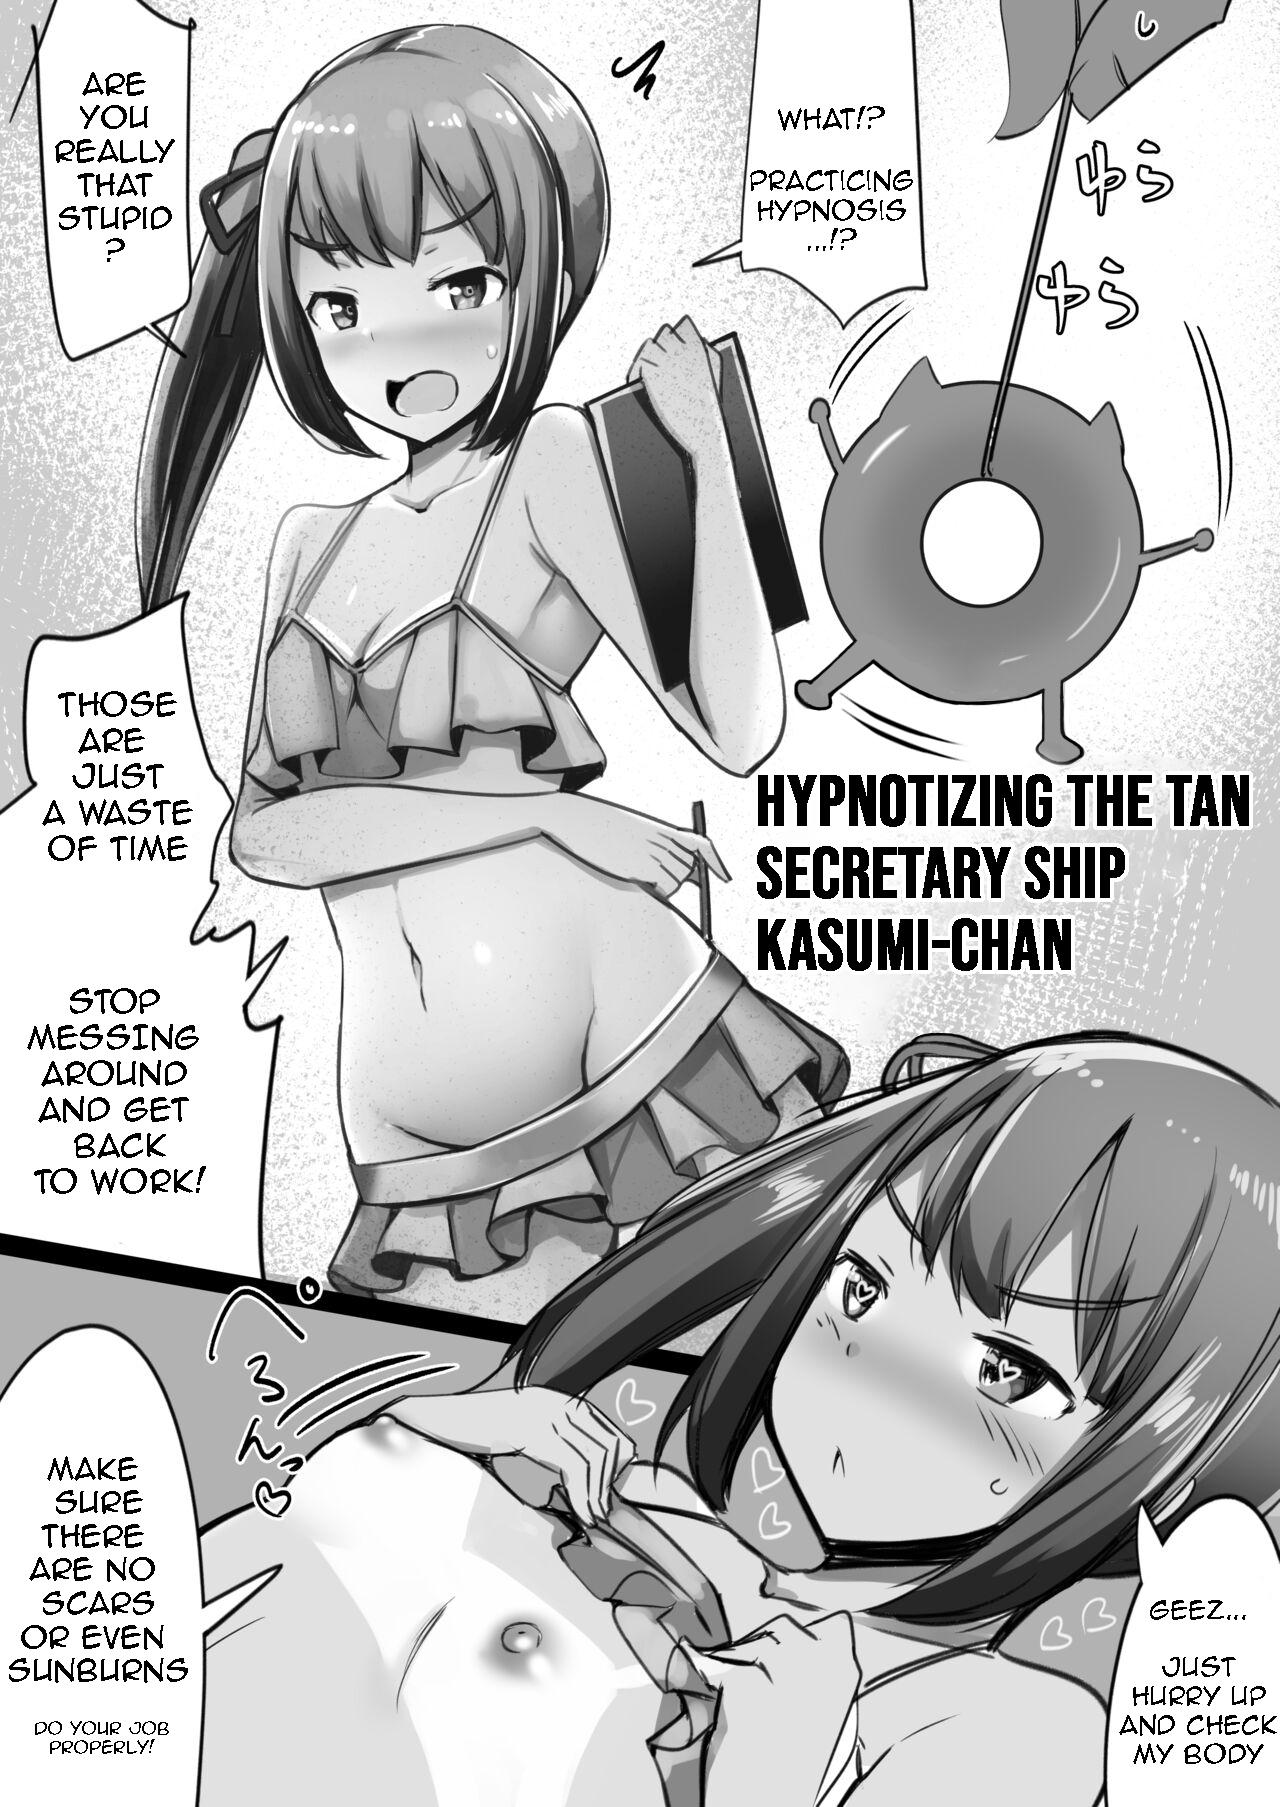 Hypnotizing the Tan Secretary Ship, Kasumi-Chan 1